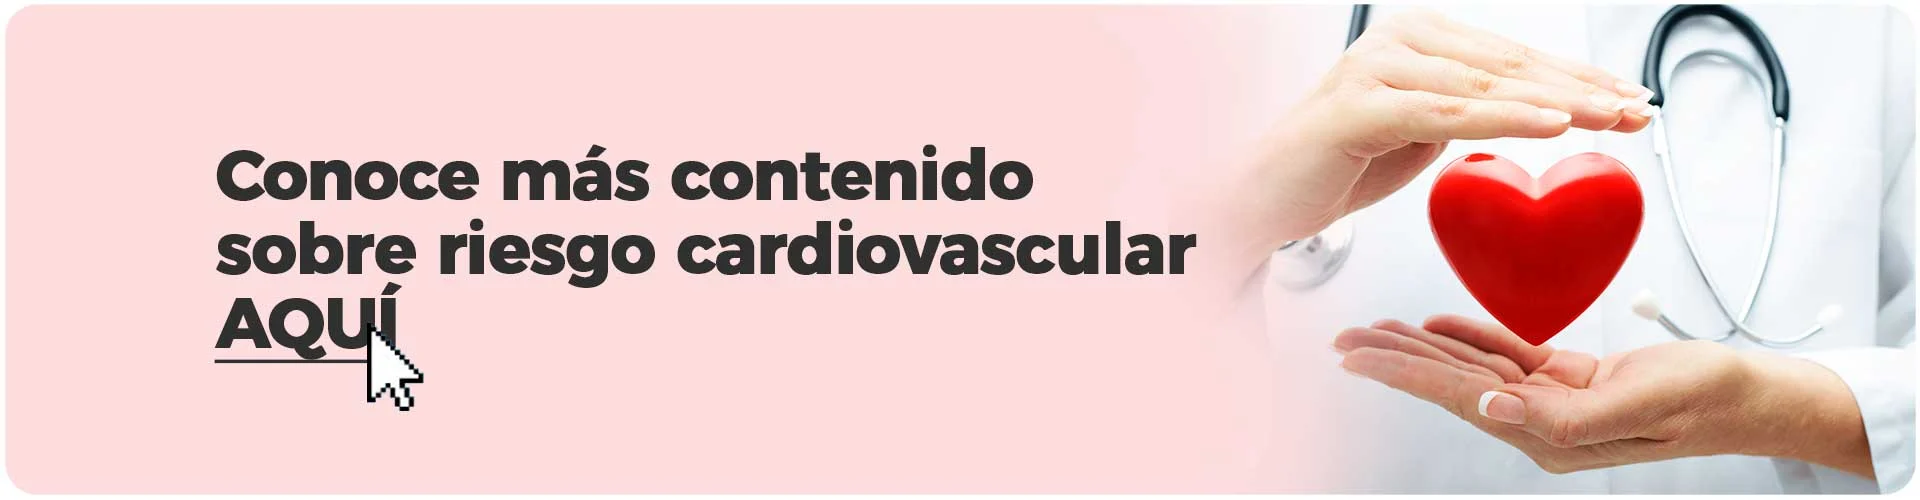 cta-cardiovascular-blog.jpg